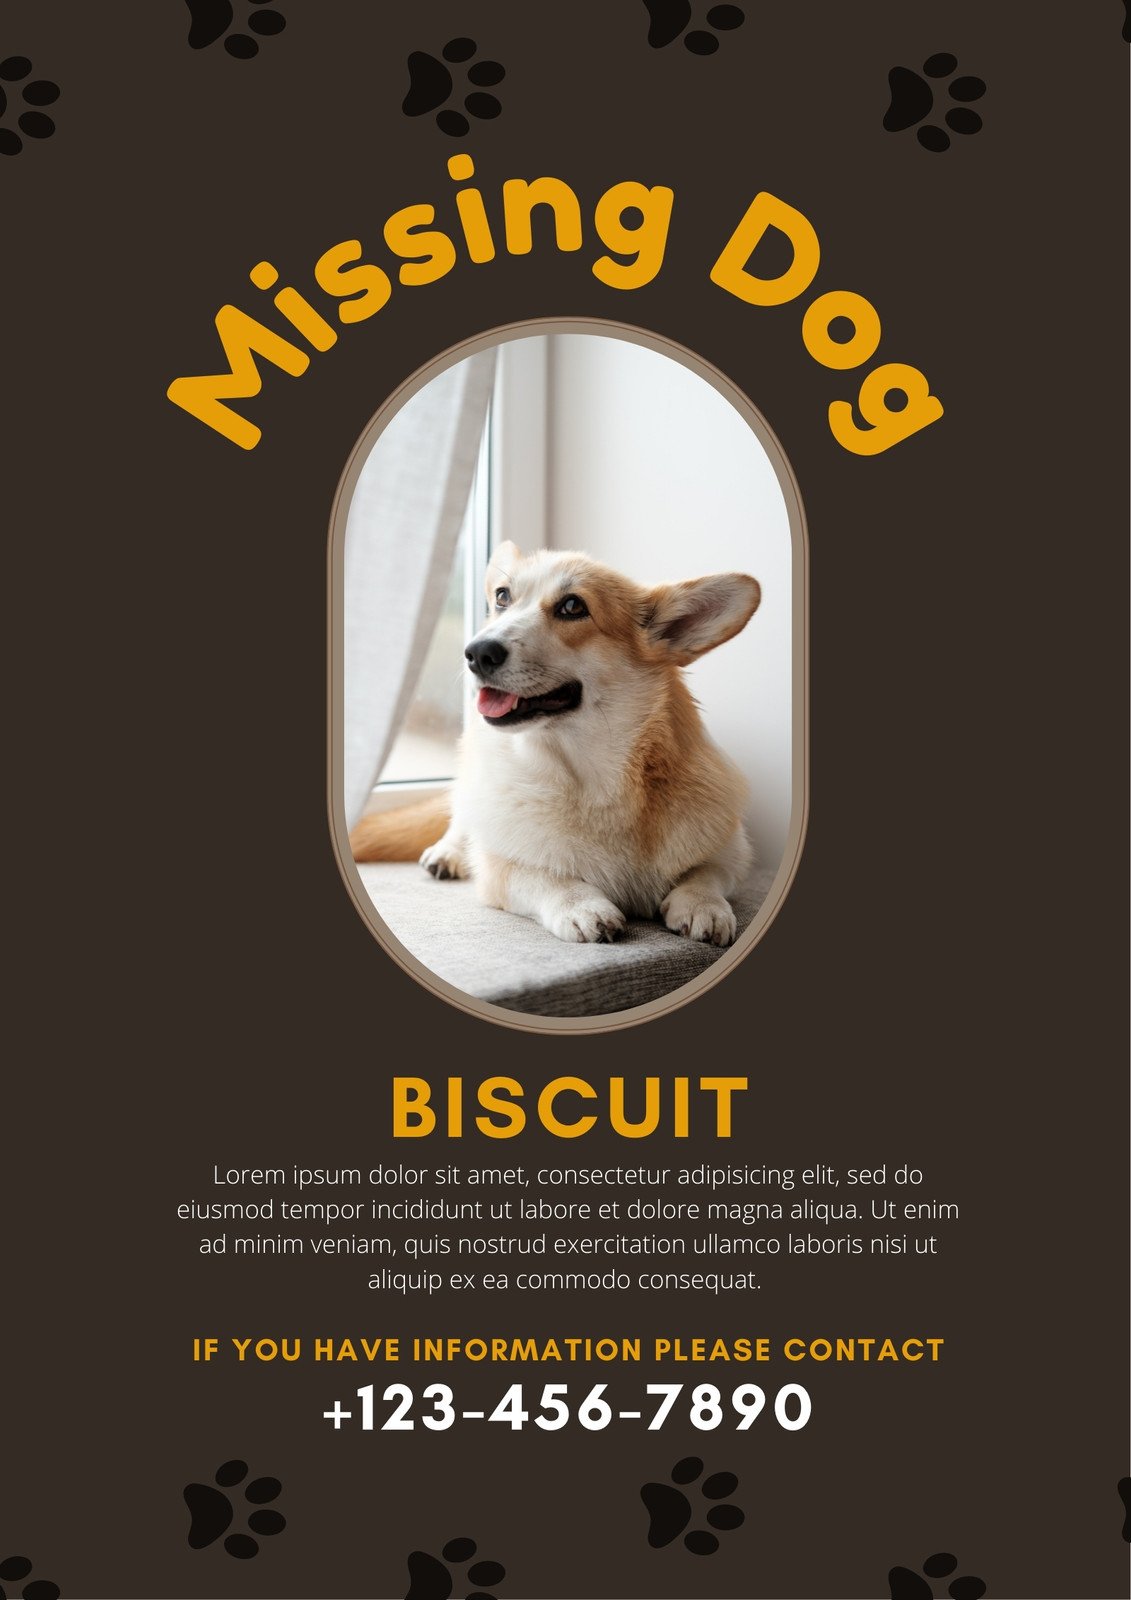 found dog poster